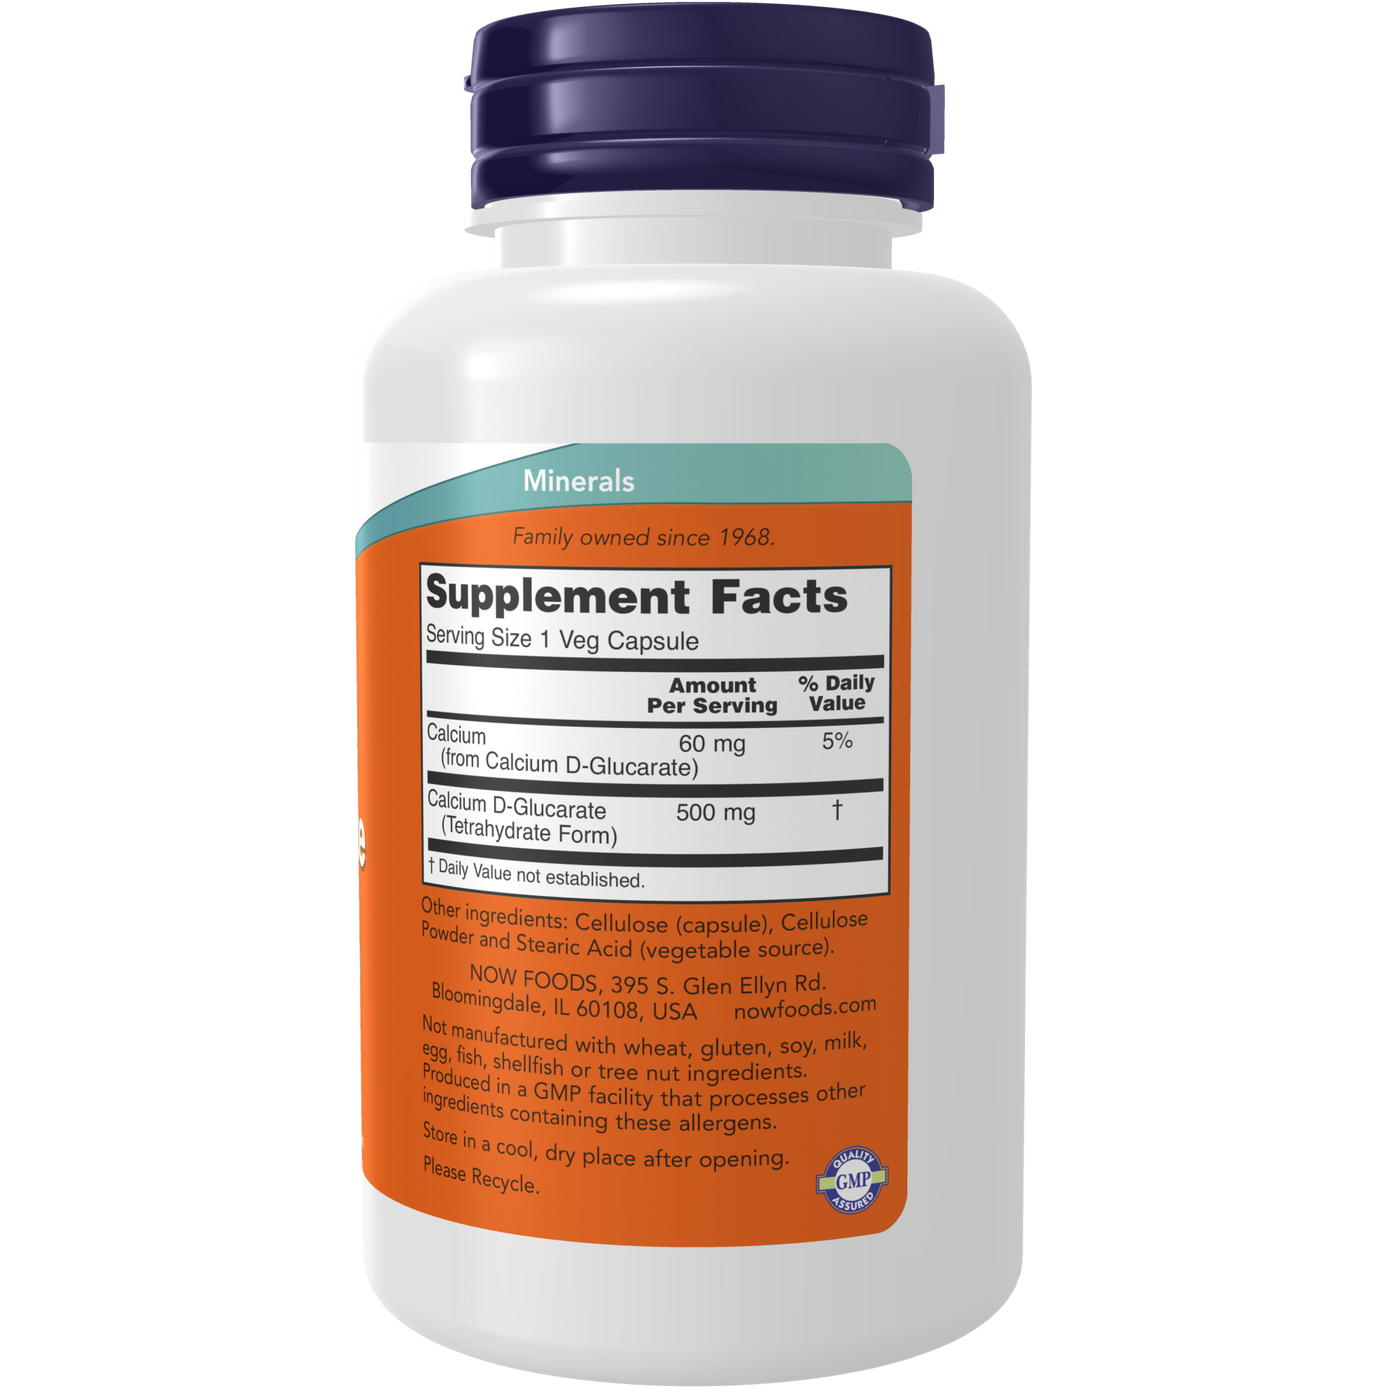 Calcium D-Glucarate 500 mg  Curated Wellness